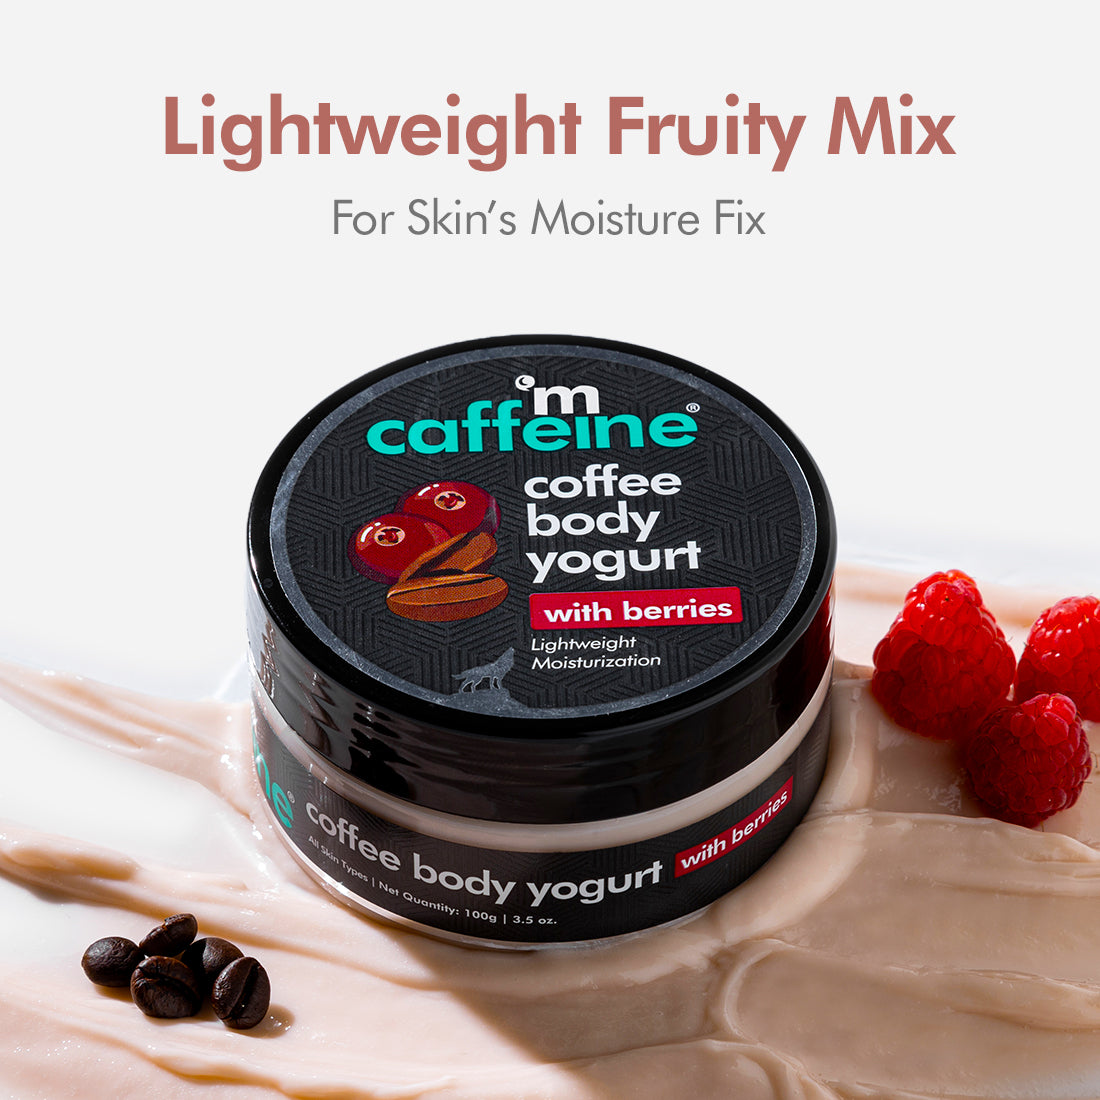 mCaffeine Coffee Body Yogurt with Cocoa